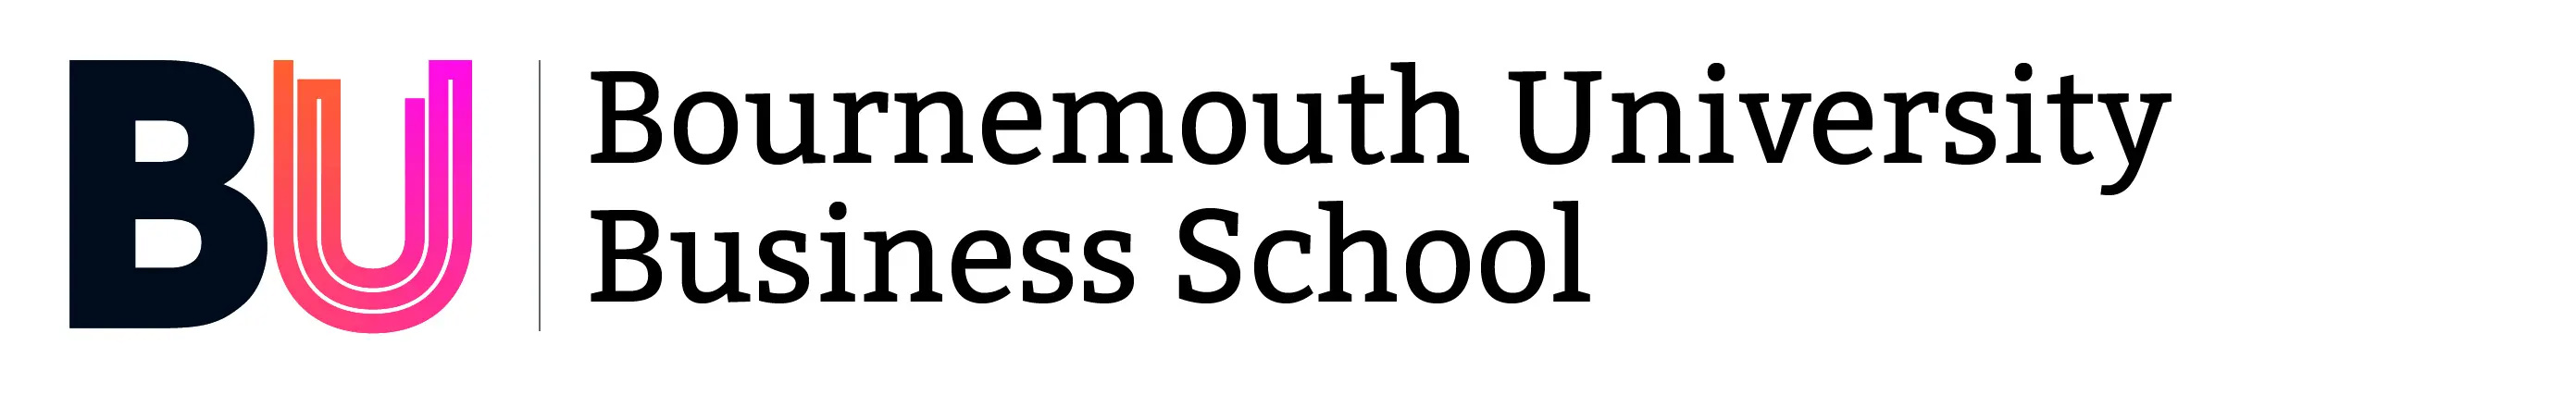 Bournemouth University Business School logo